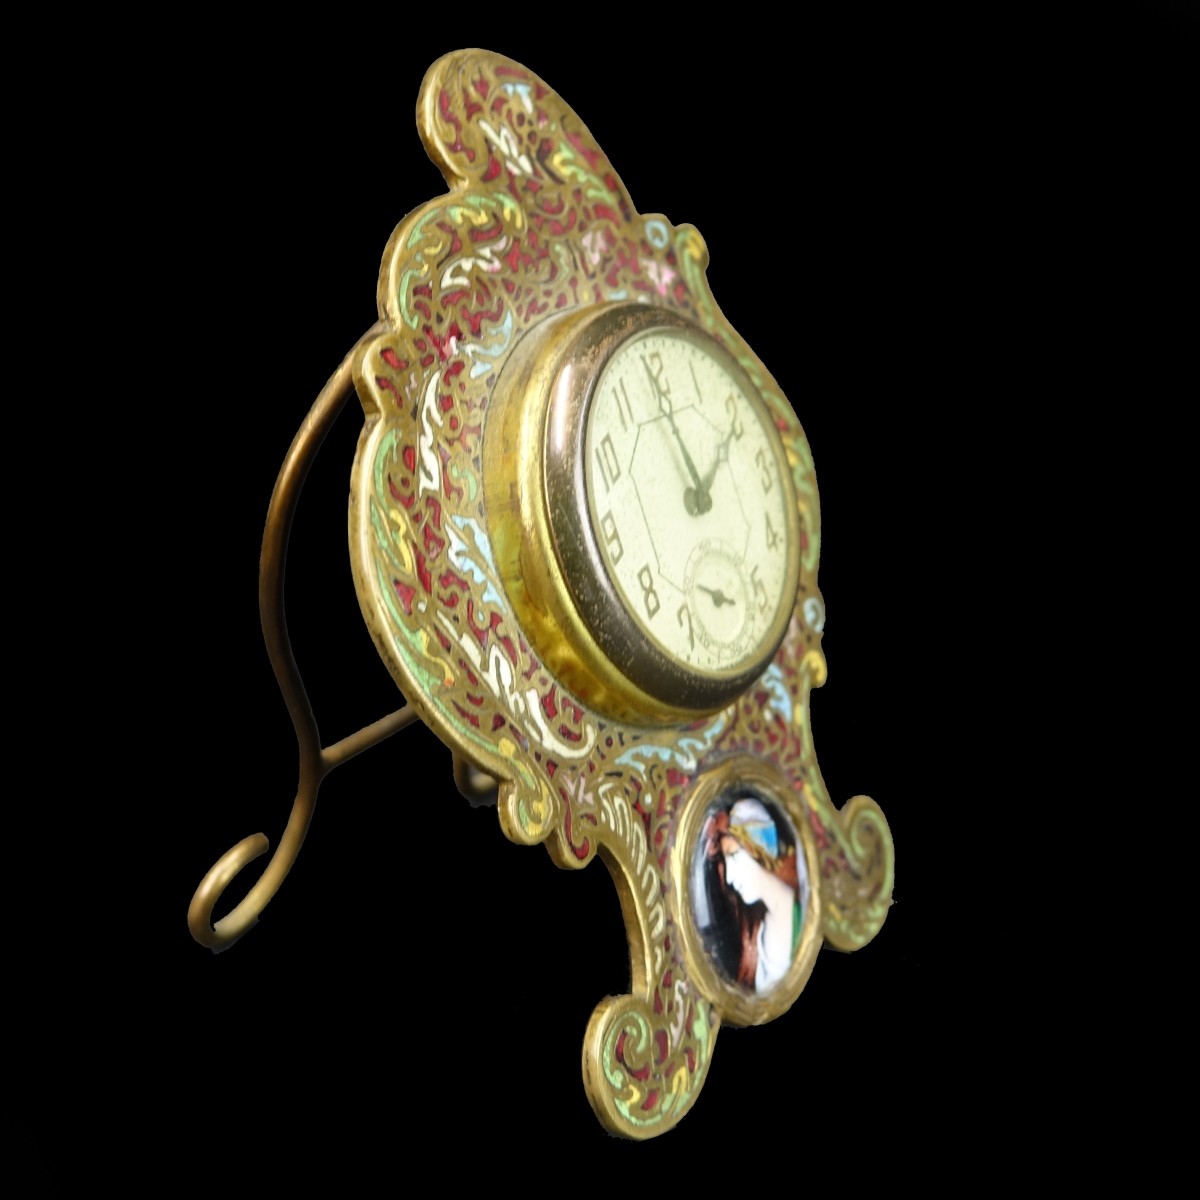 Antique French Miniature Clock